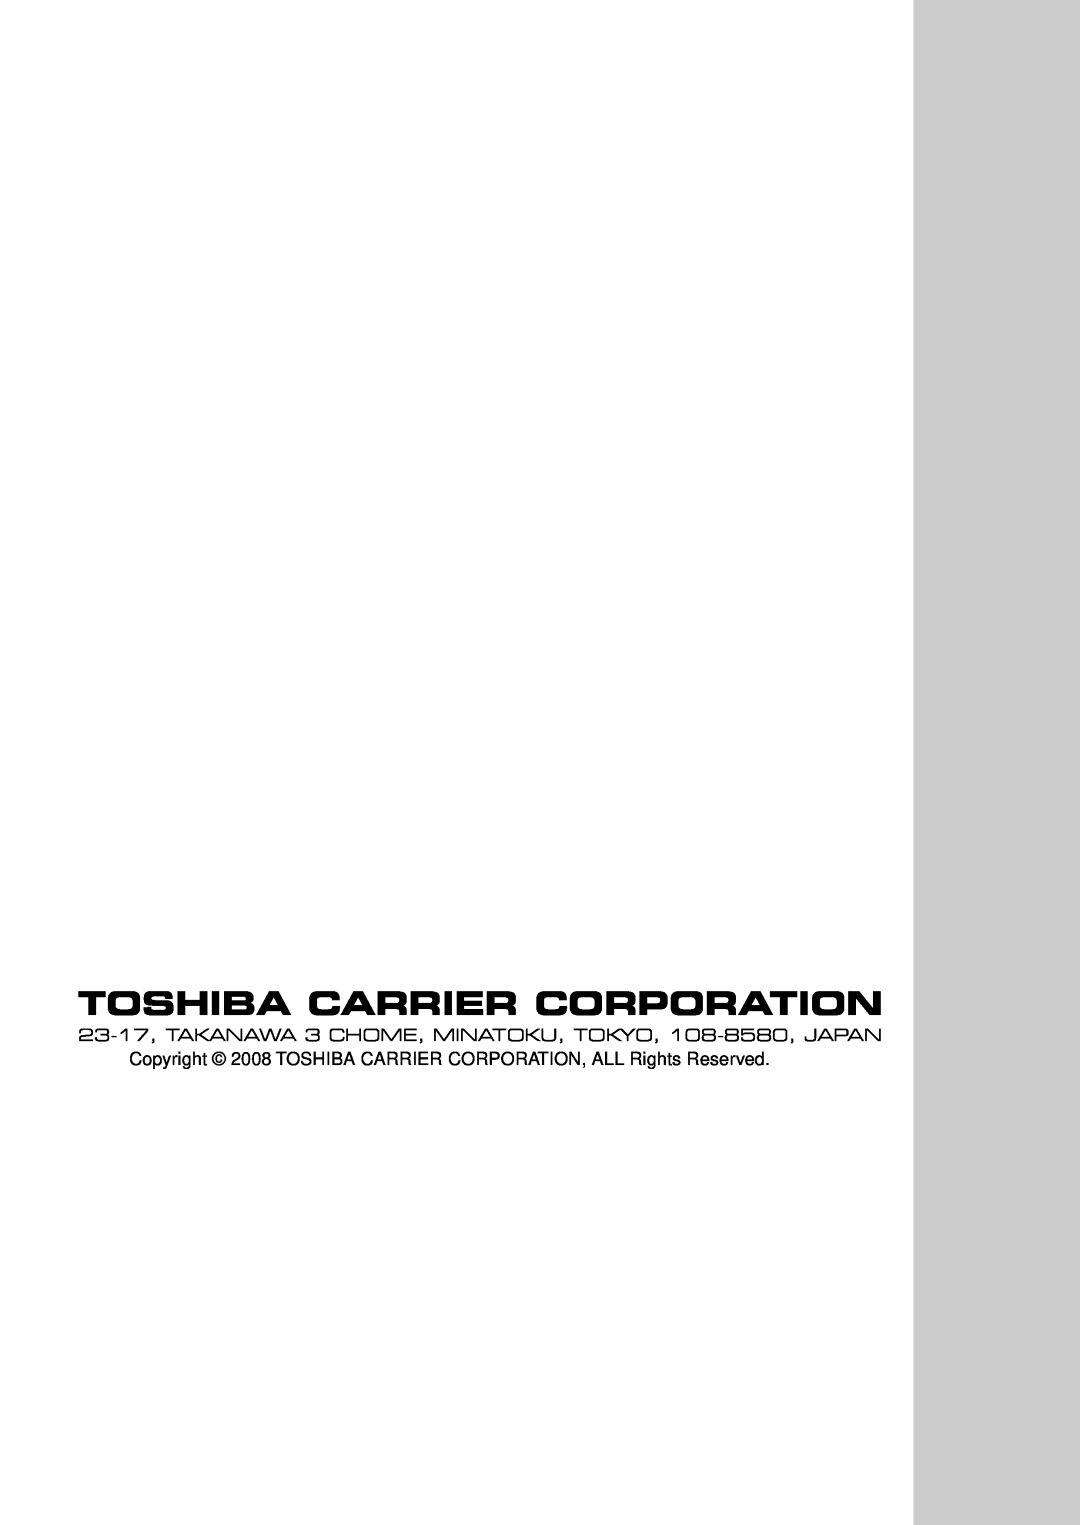 Toshiba RAV-SP404AT-E service manual Toshiba Carrier Corporation, 23-17, TAKANAWA 3 CHOME, MINATOKU, TOKYO, 108-8580, JAPAN 